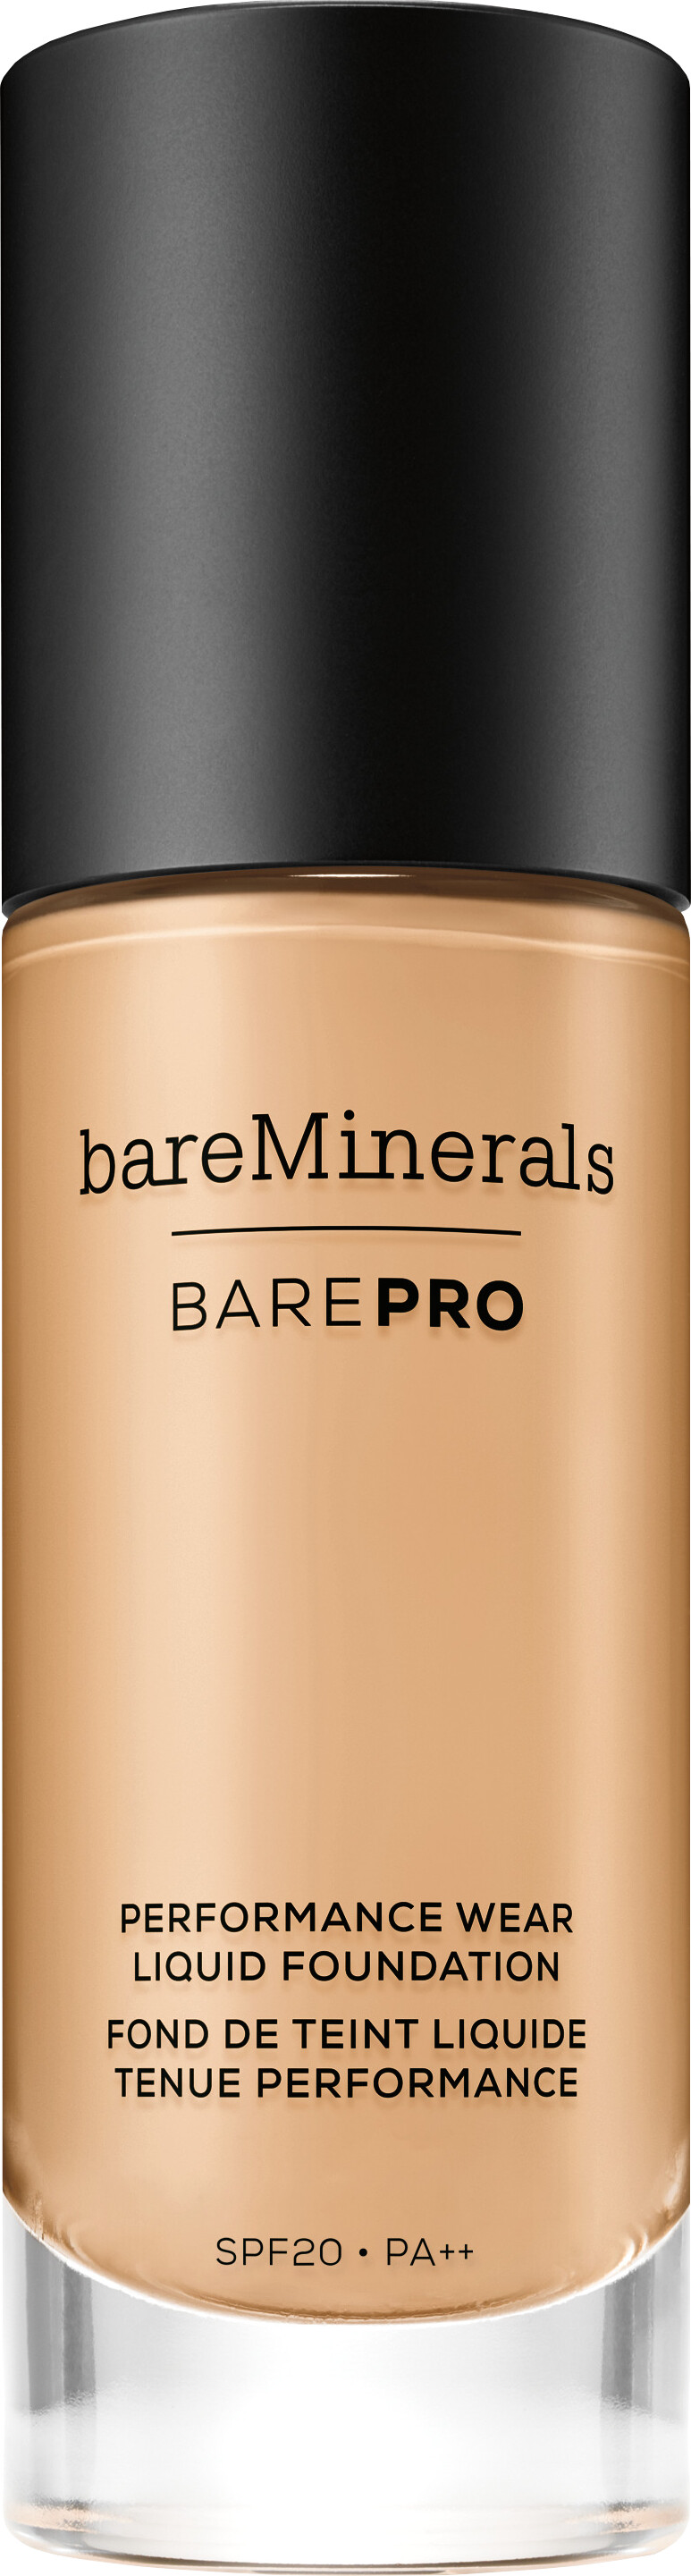 bareMinerals BAREPRO Performance Wear Liquid Foundation SPF20 30ml 15.5 - Butterscotch